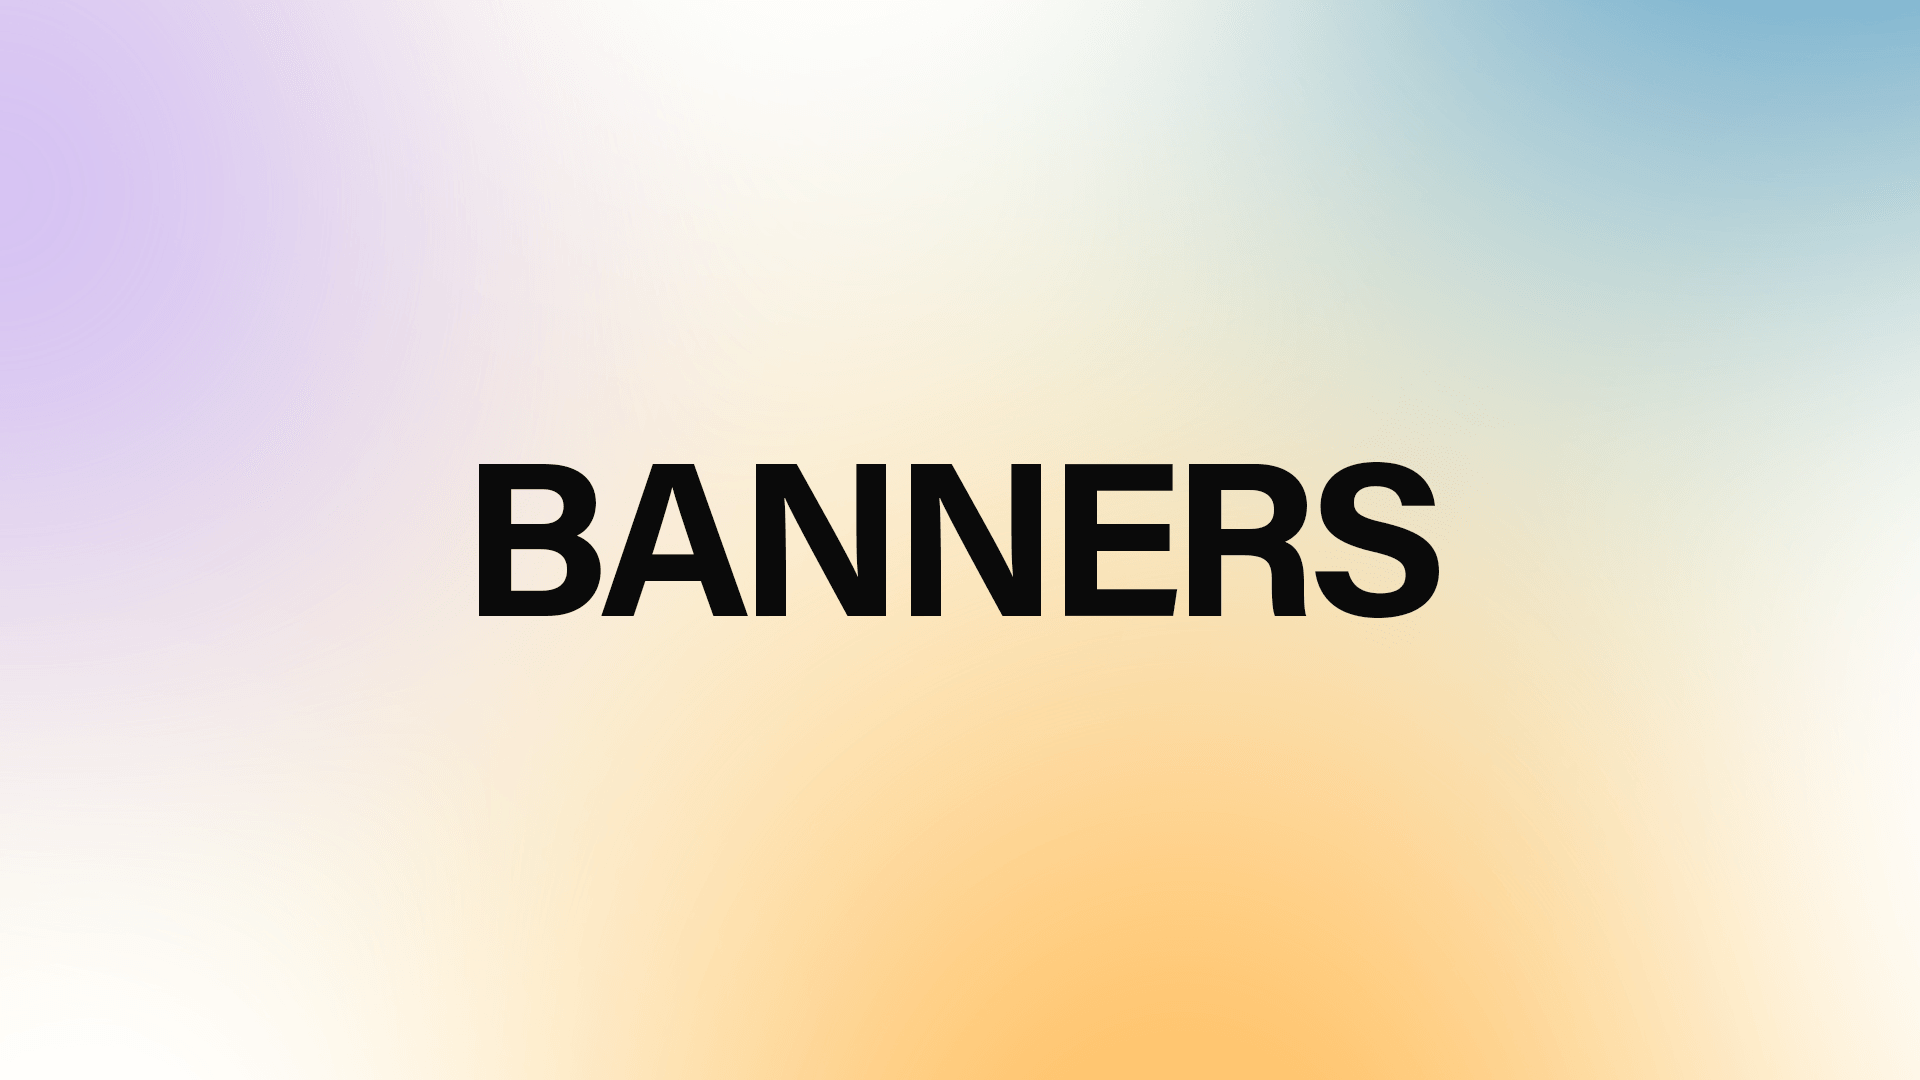 Banners - GFXCRATE